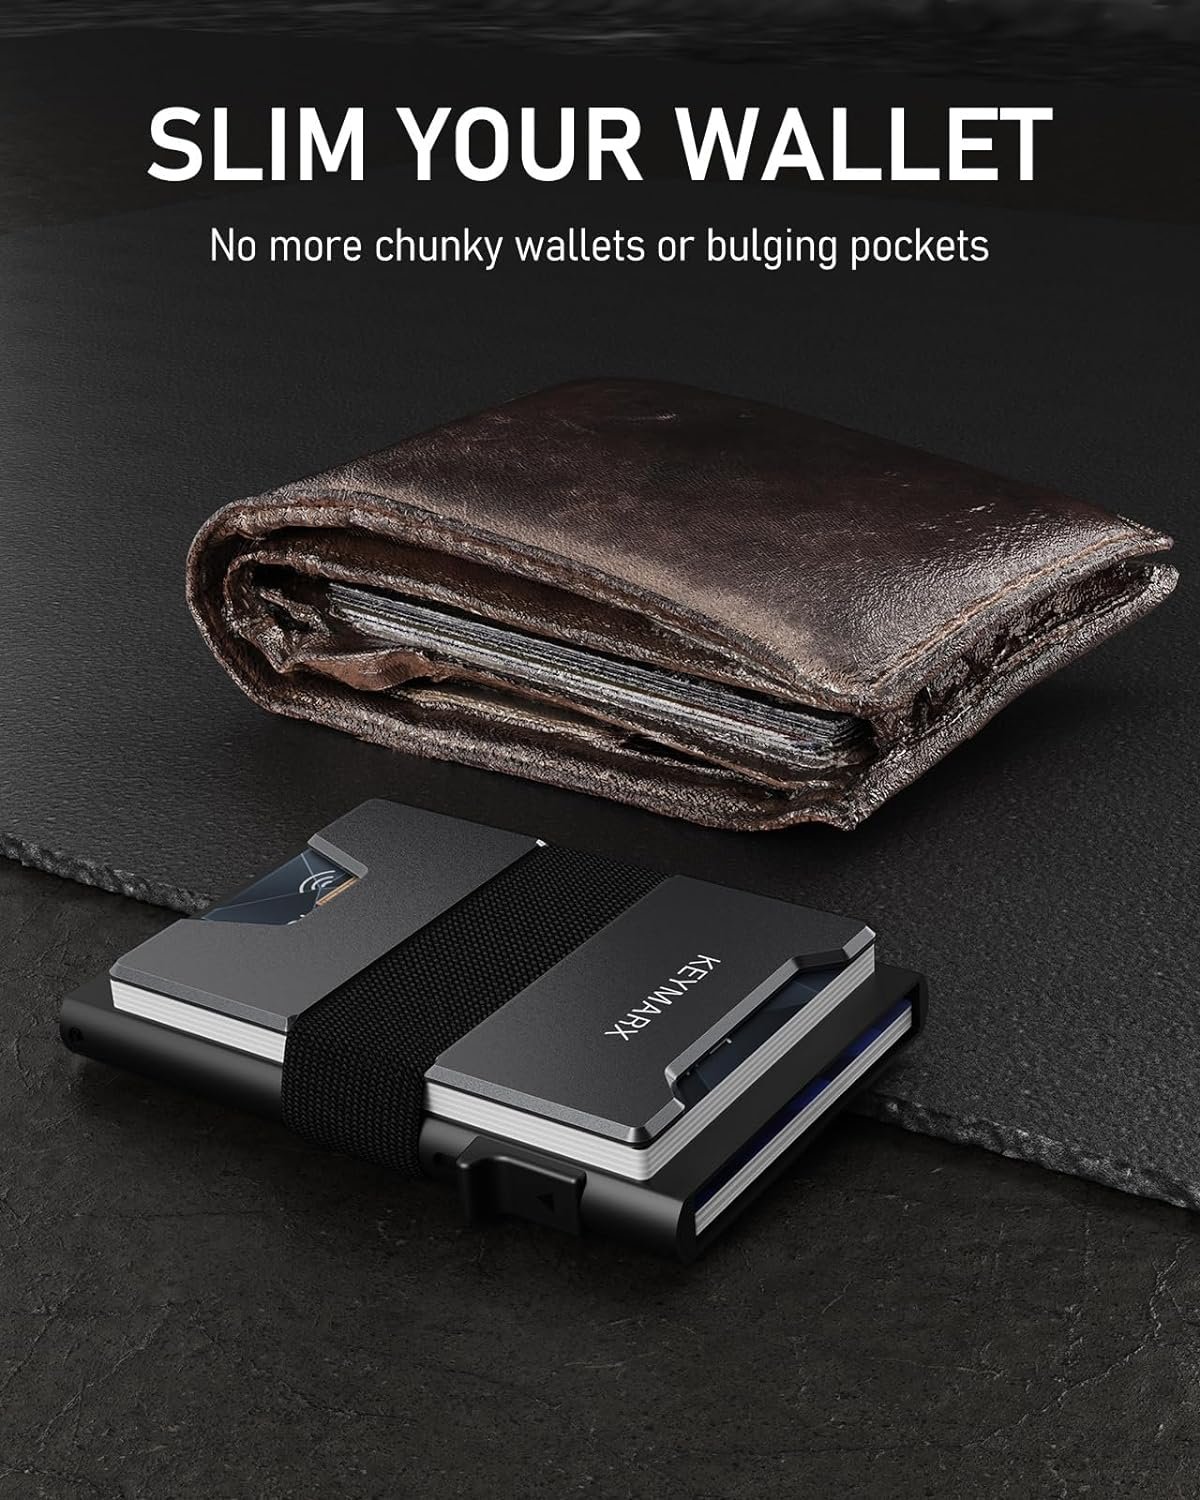 Metal Card Holder Wallet Review